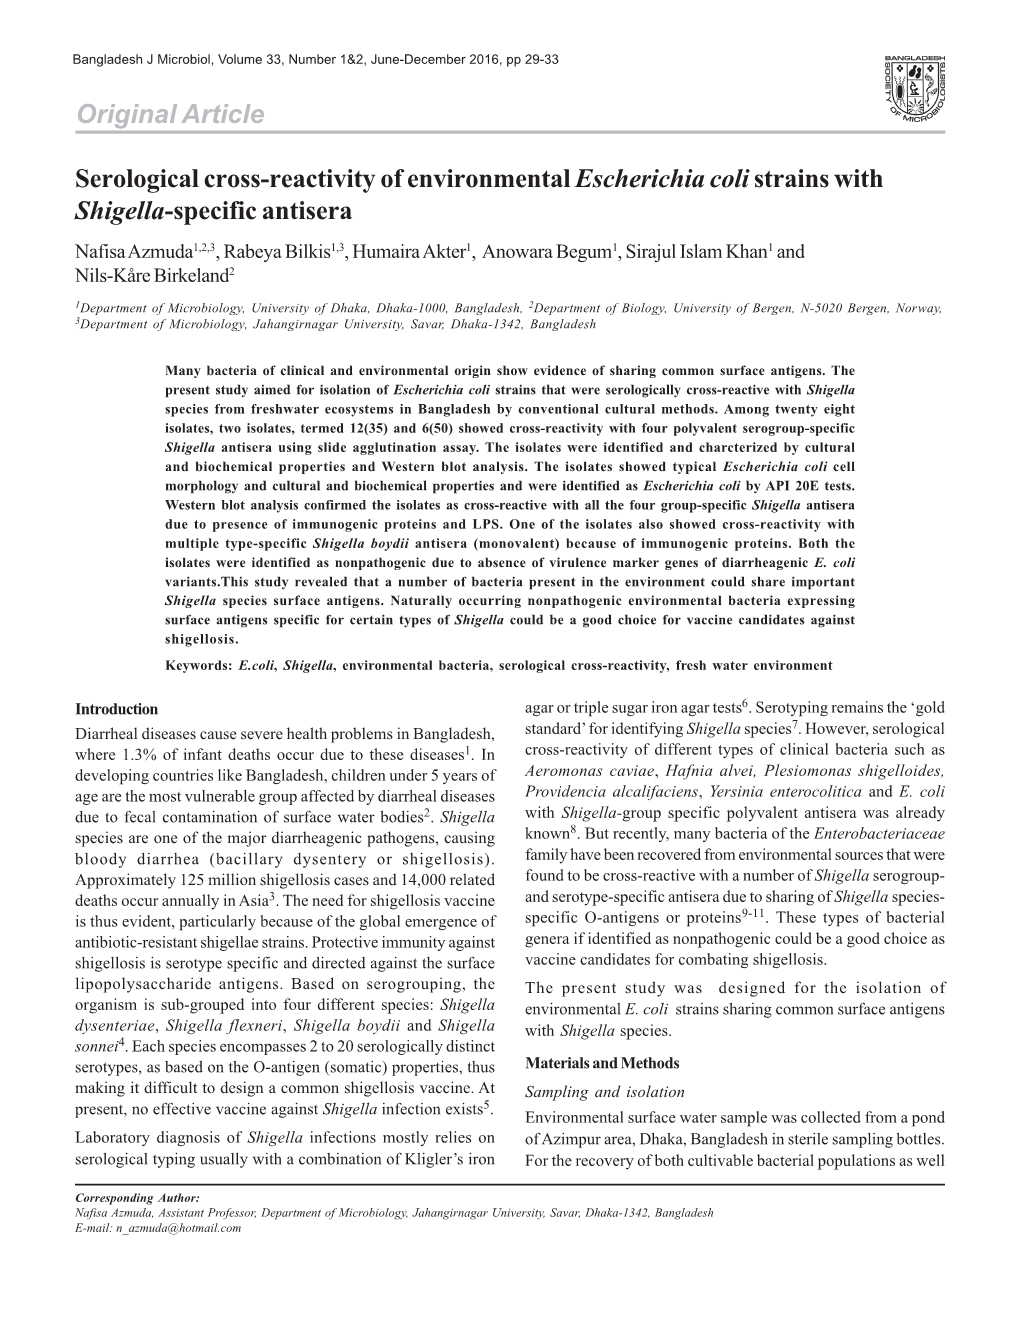 Original Article Serological Cross-Reactivity of Environmental